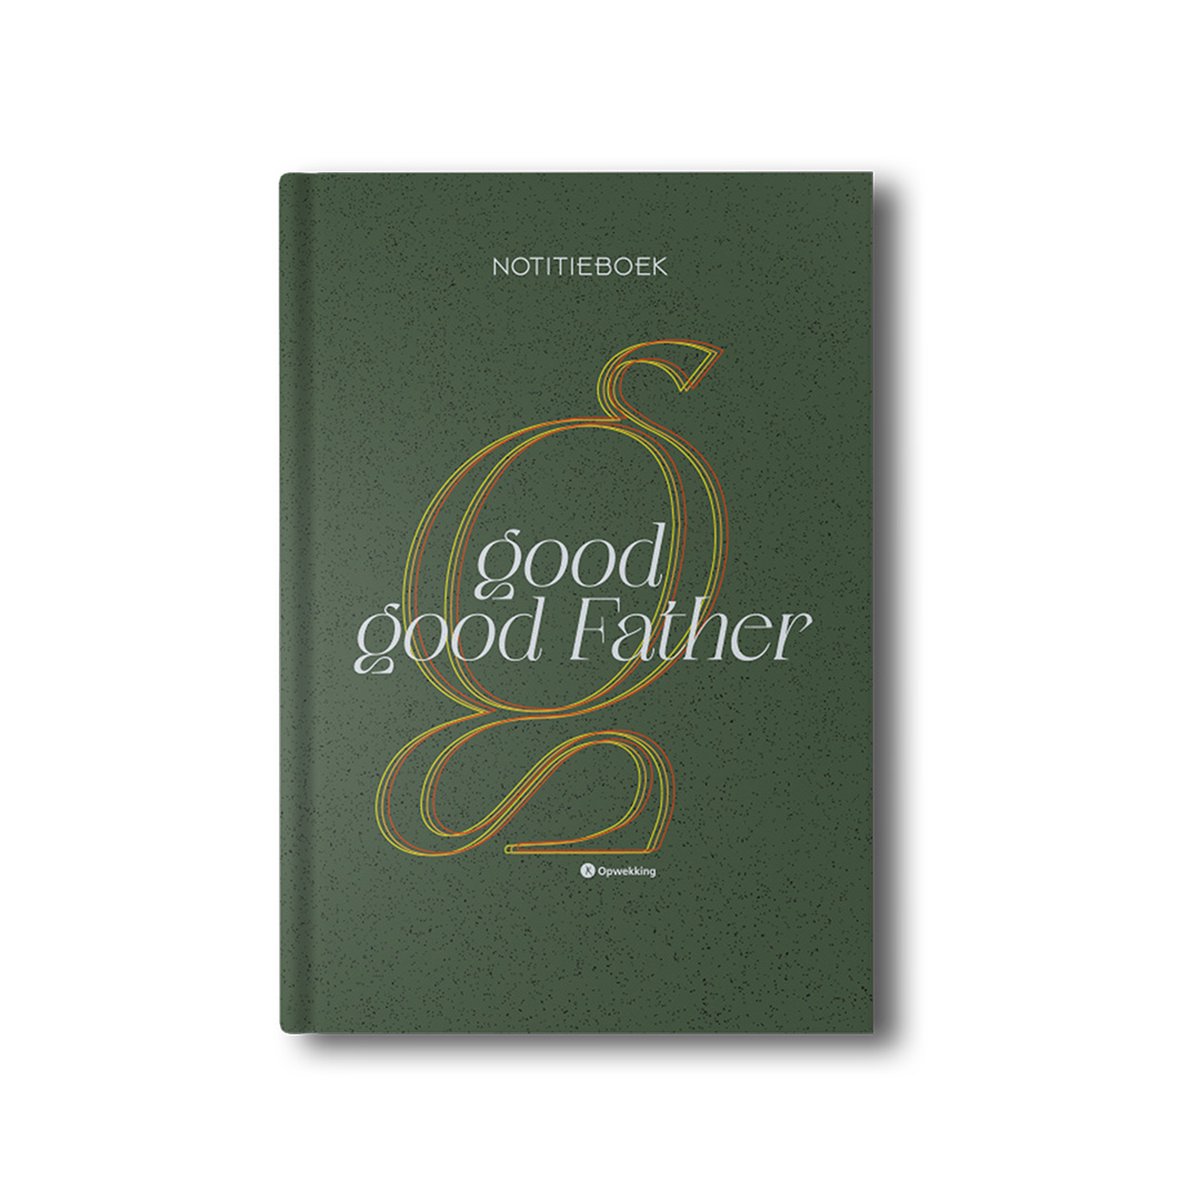 Notitieboek ‘Good, good Father’ - MajesticAlly